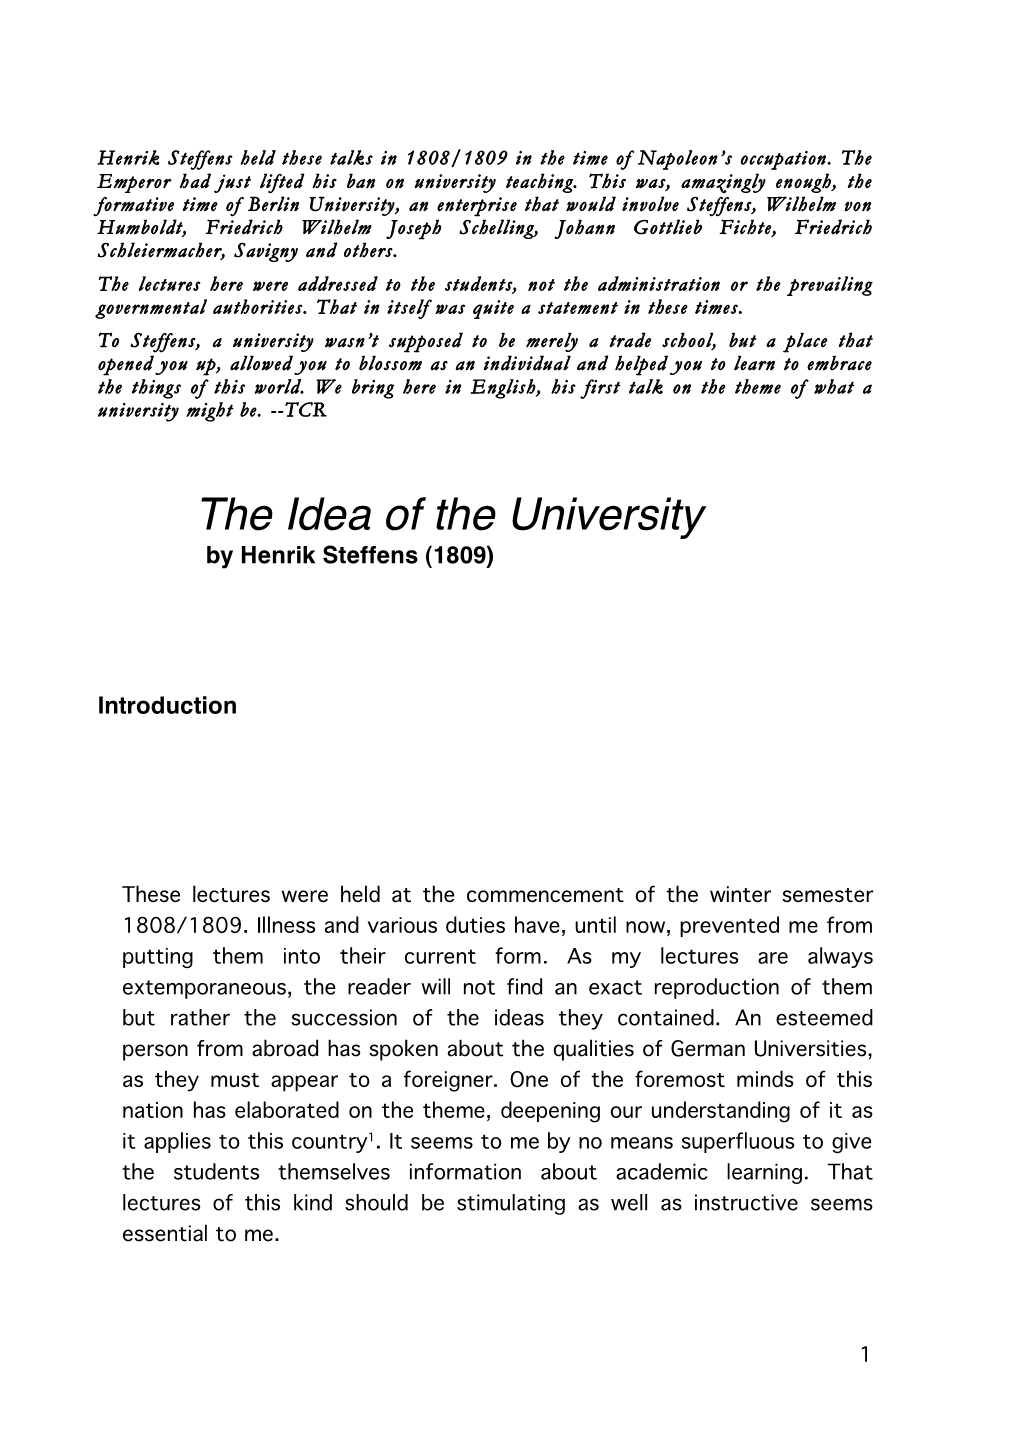 The Idea of the University by Henrik Steffens (1809)